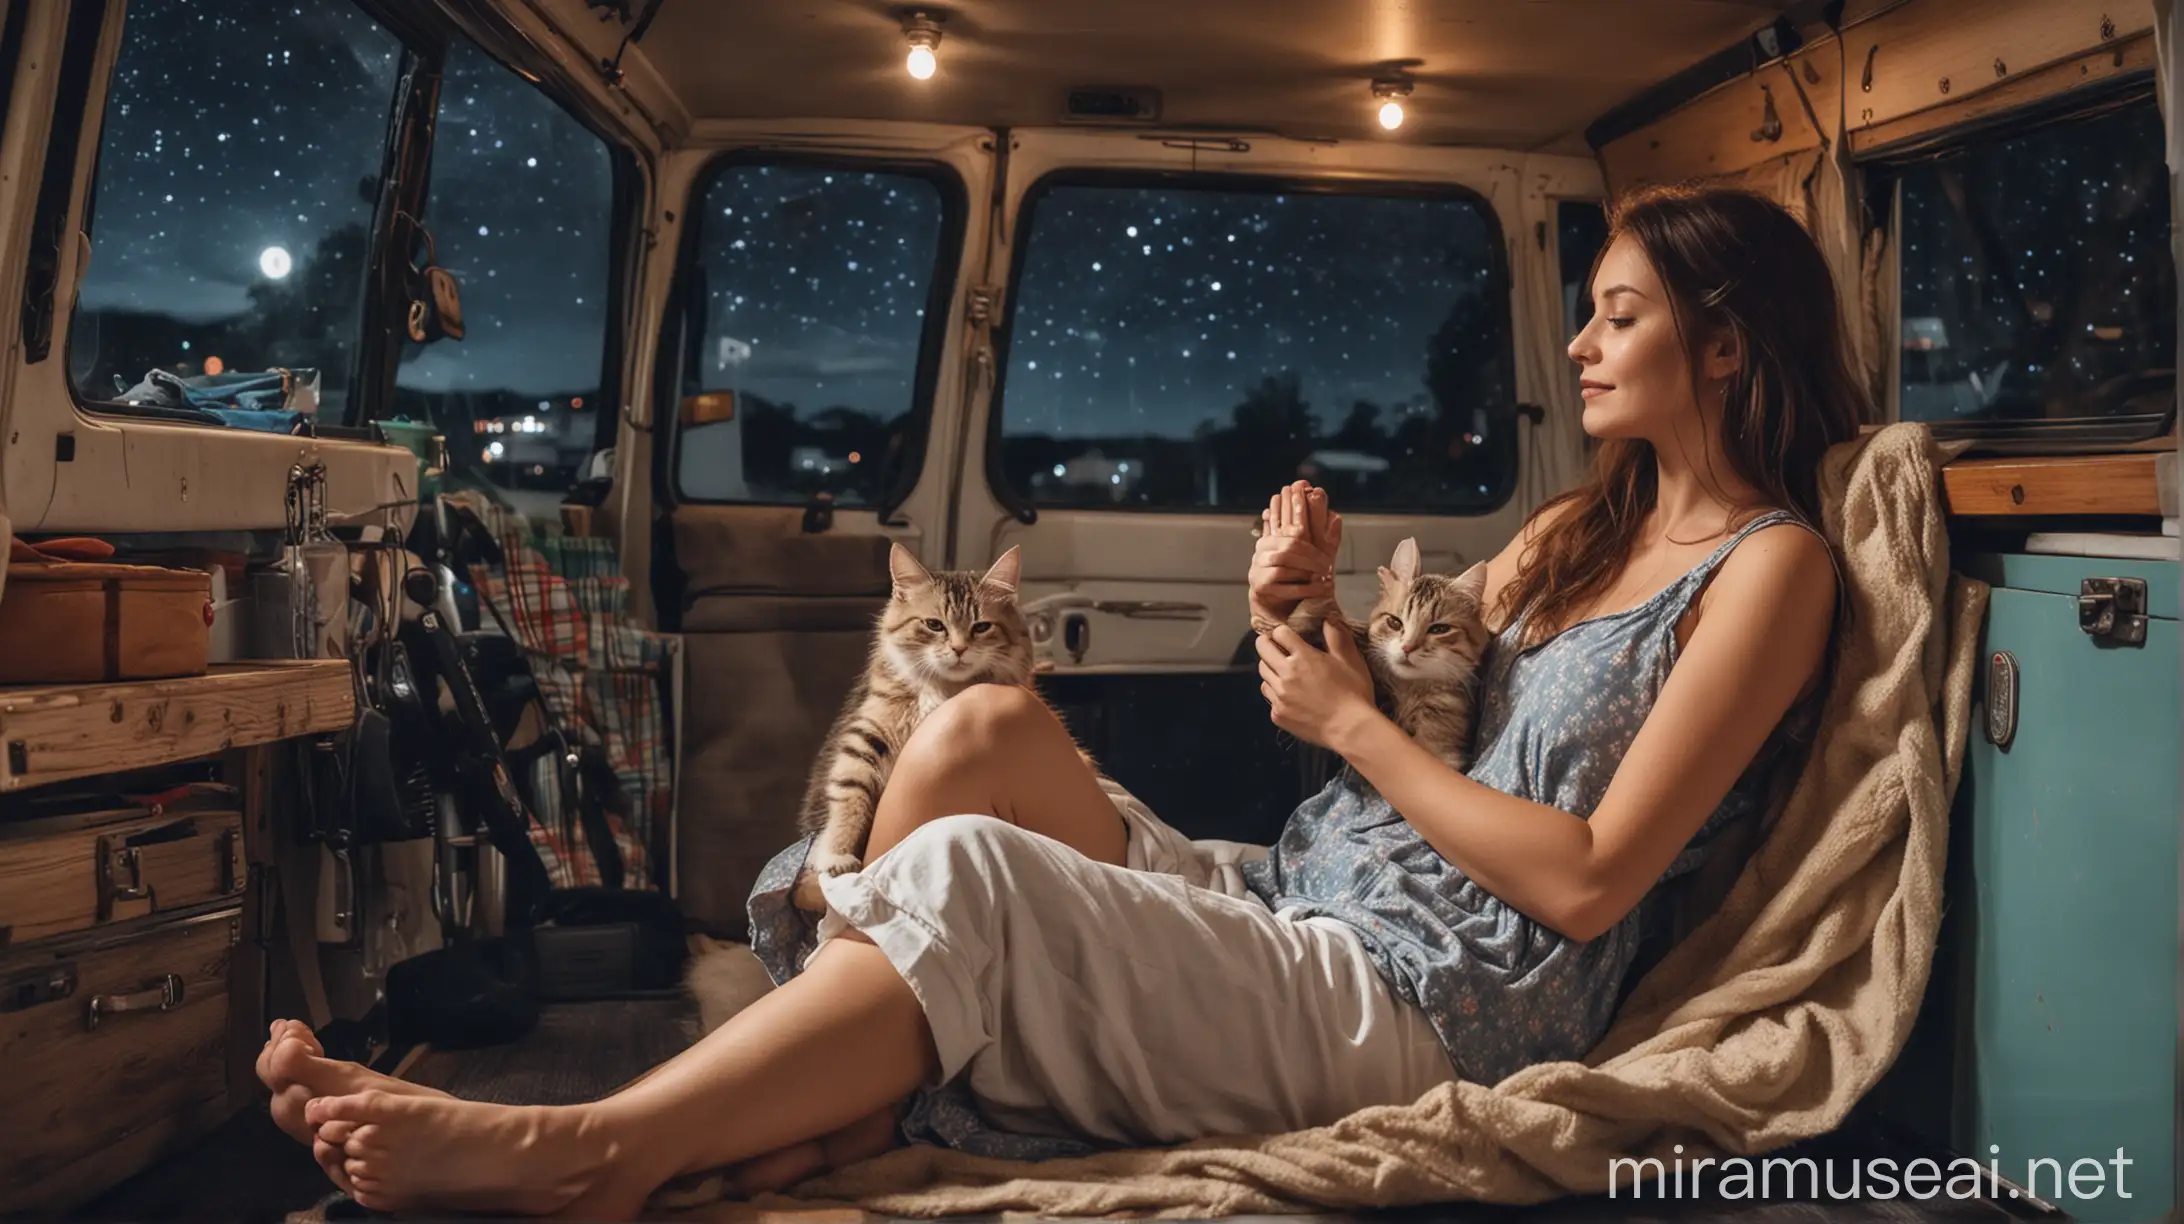 Melancholic Night Beautiful Woman and Cat Relaxing in Campervan